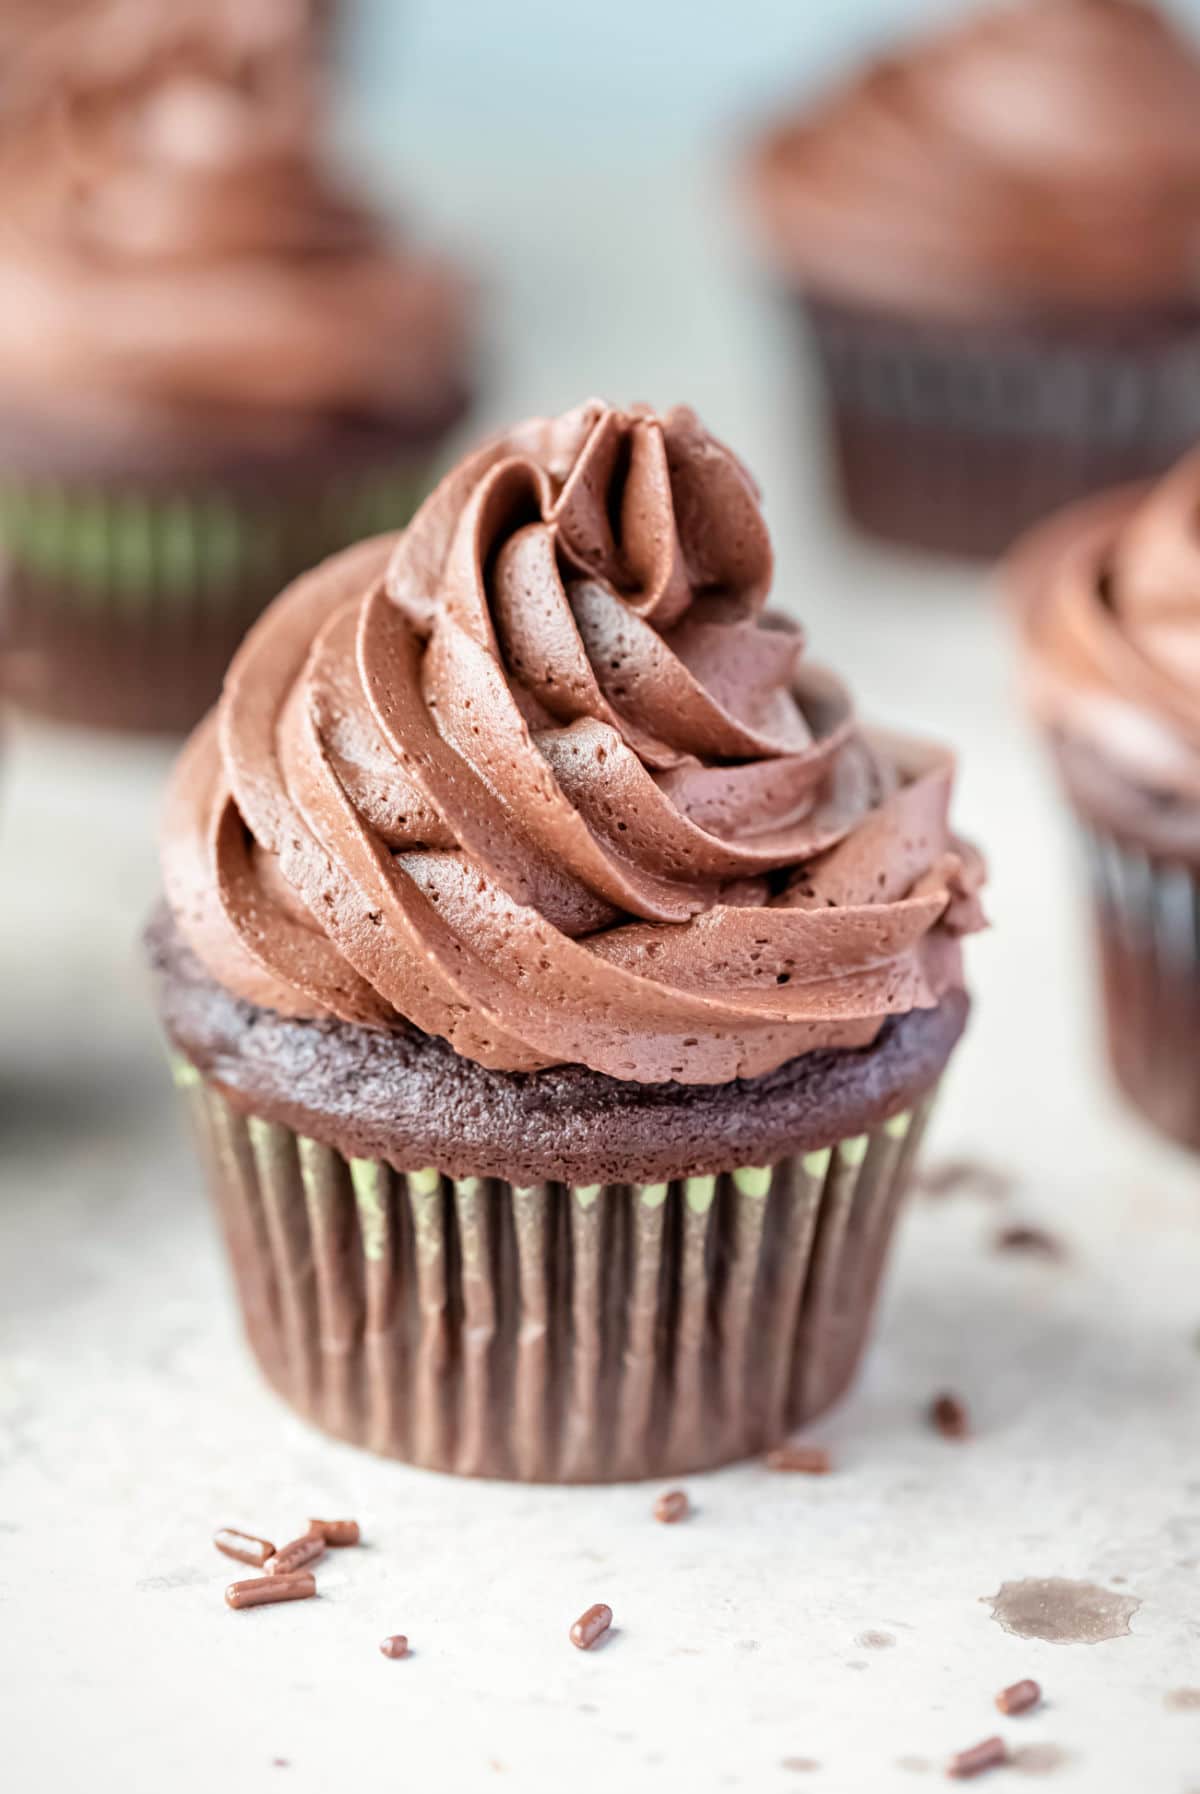 Chocolate Cupcakes {Easiest EVER Recipe!}